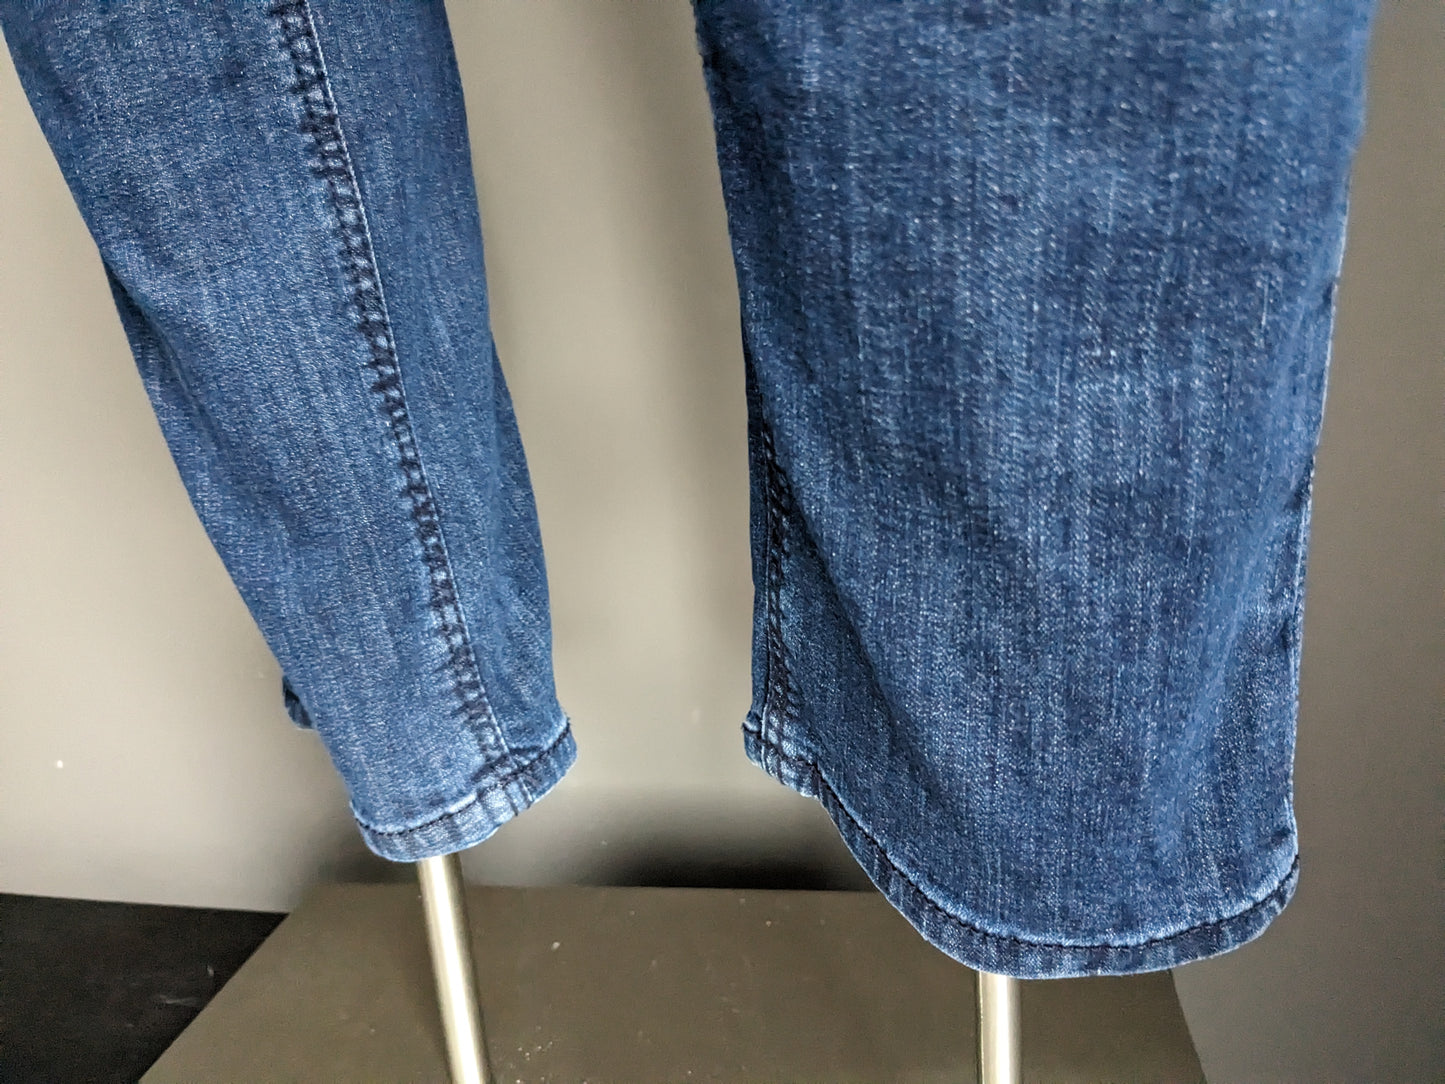 C&A Jeans. Dark blue. W29 - L32. Straight fit stretch.